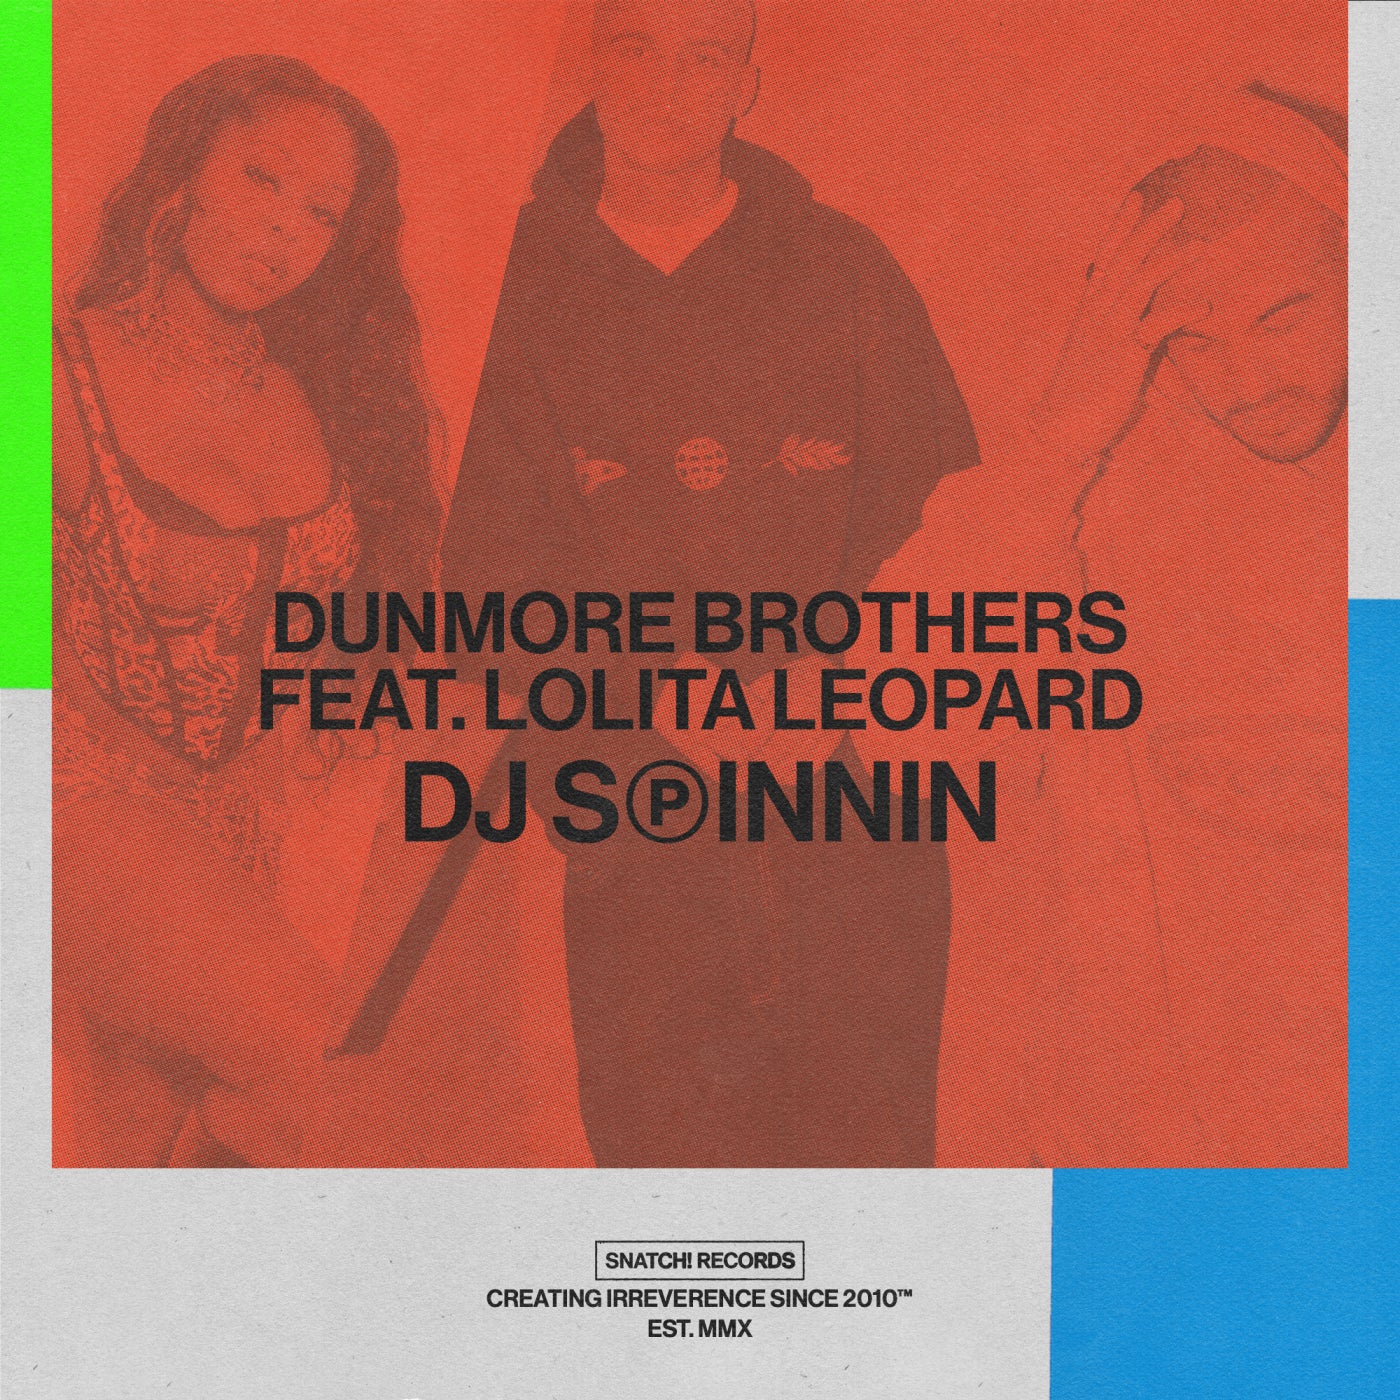 Dunmore Brothers, Lolita Leopard - DJ Spinnin on Snatch! Records